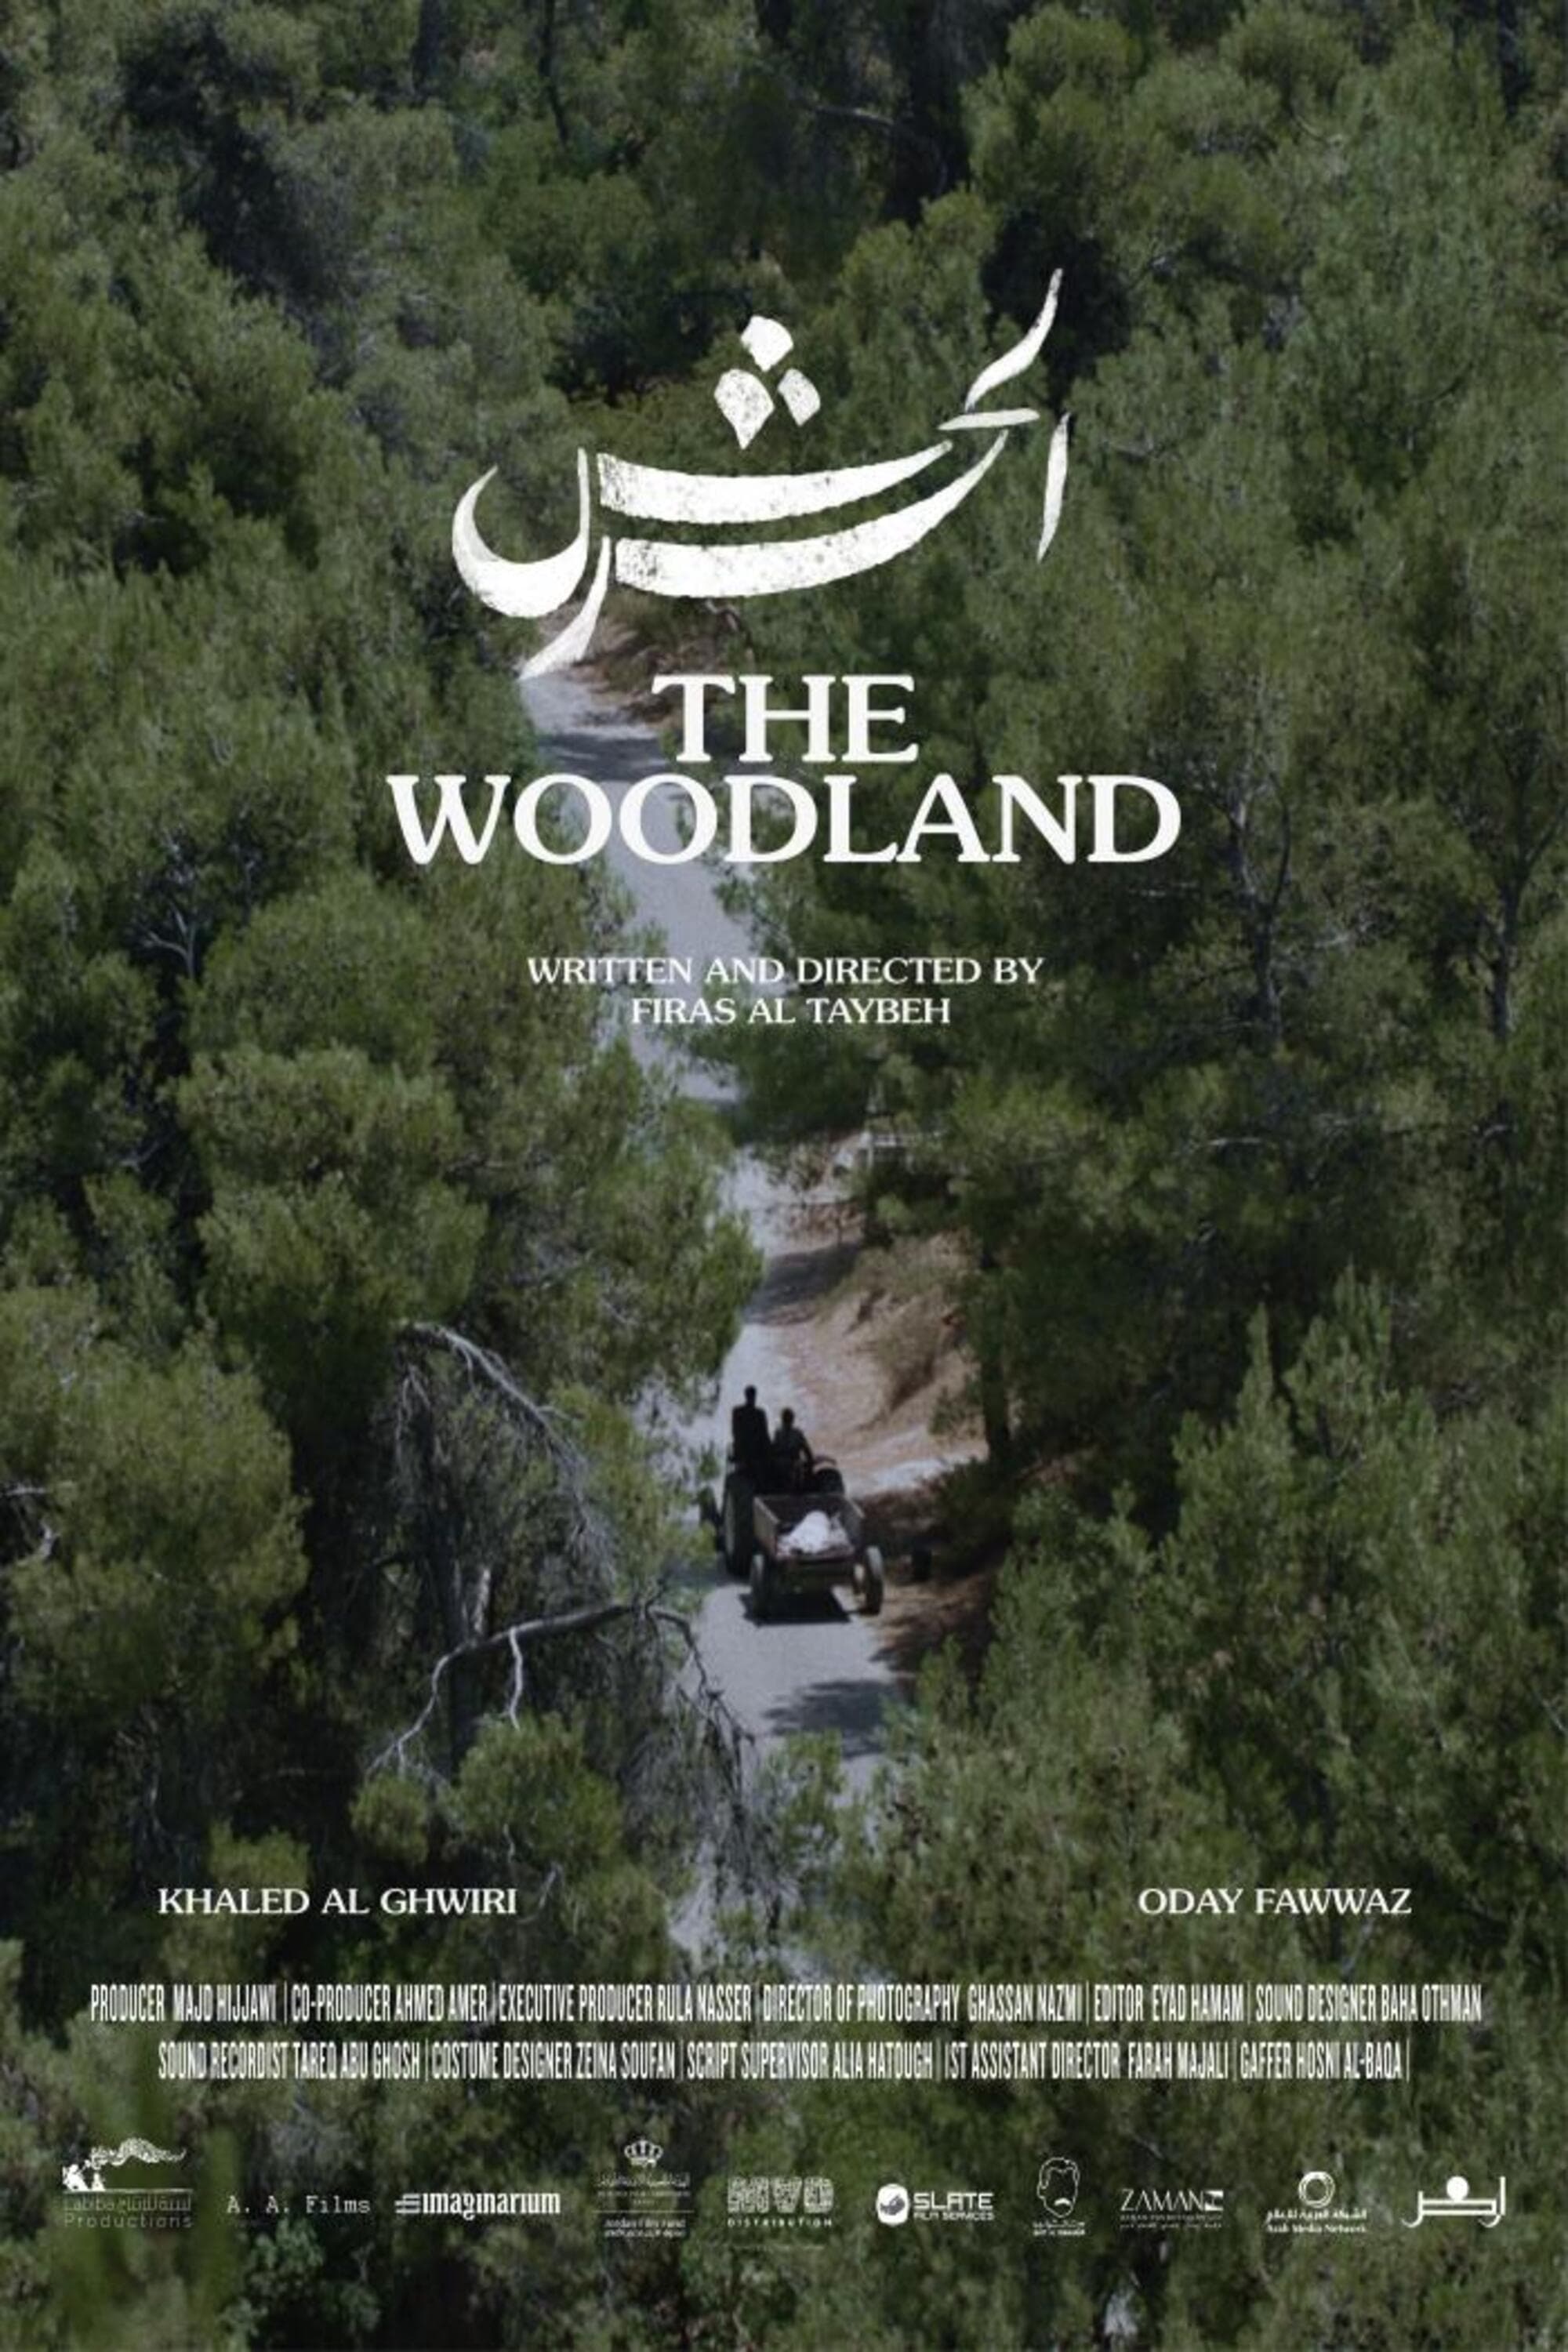 The Woodland